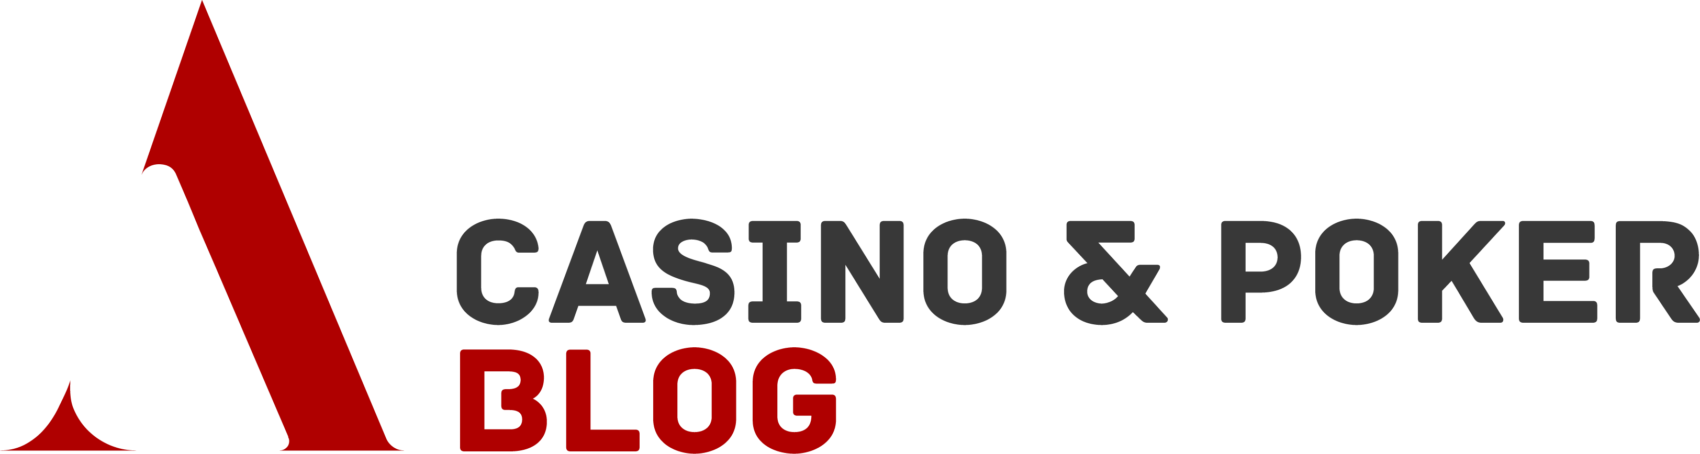 What is Poker freelancing?